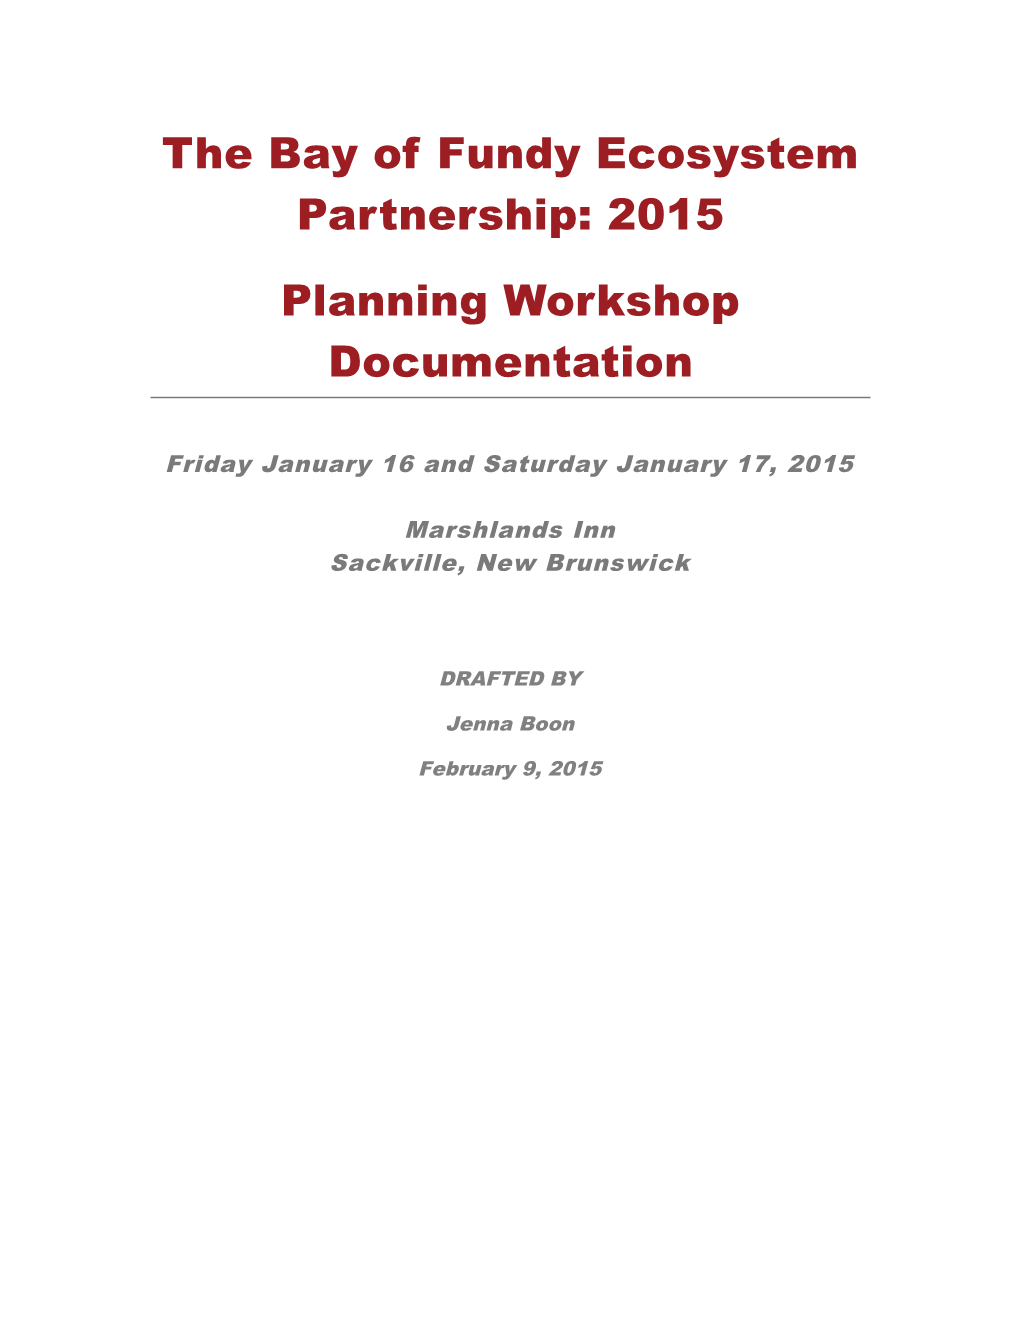 The Bay of Fundy Ecosystem Partnership: 2015